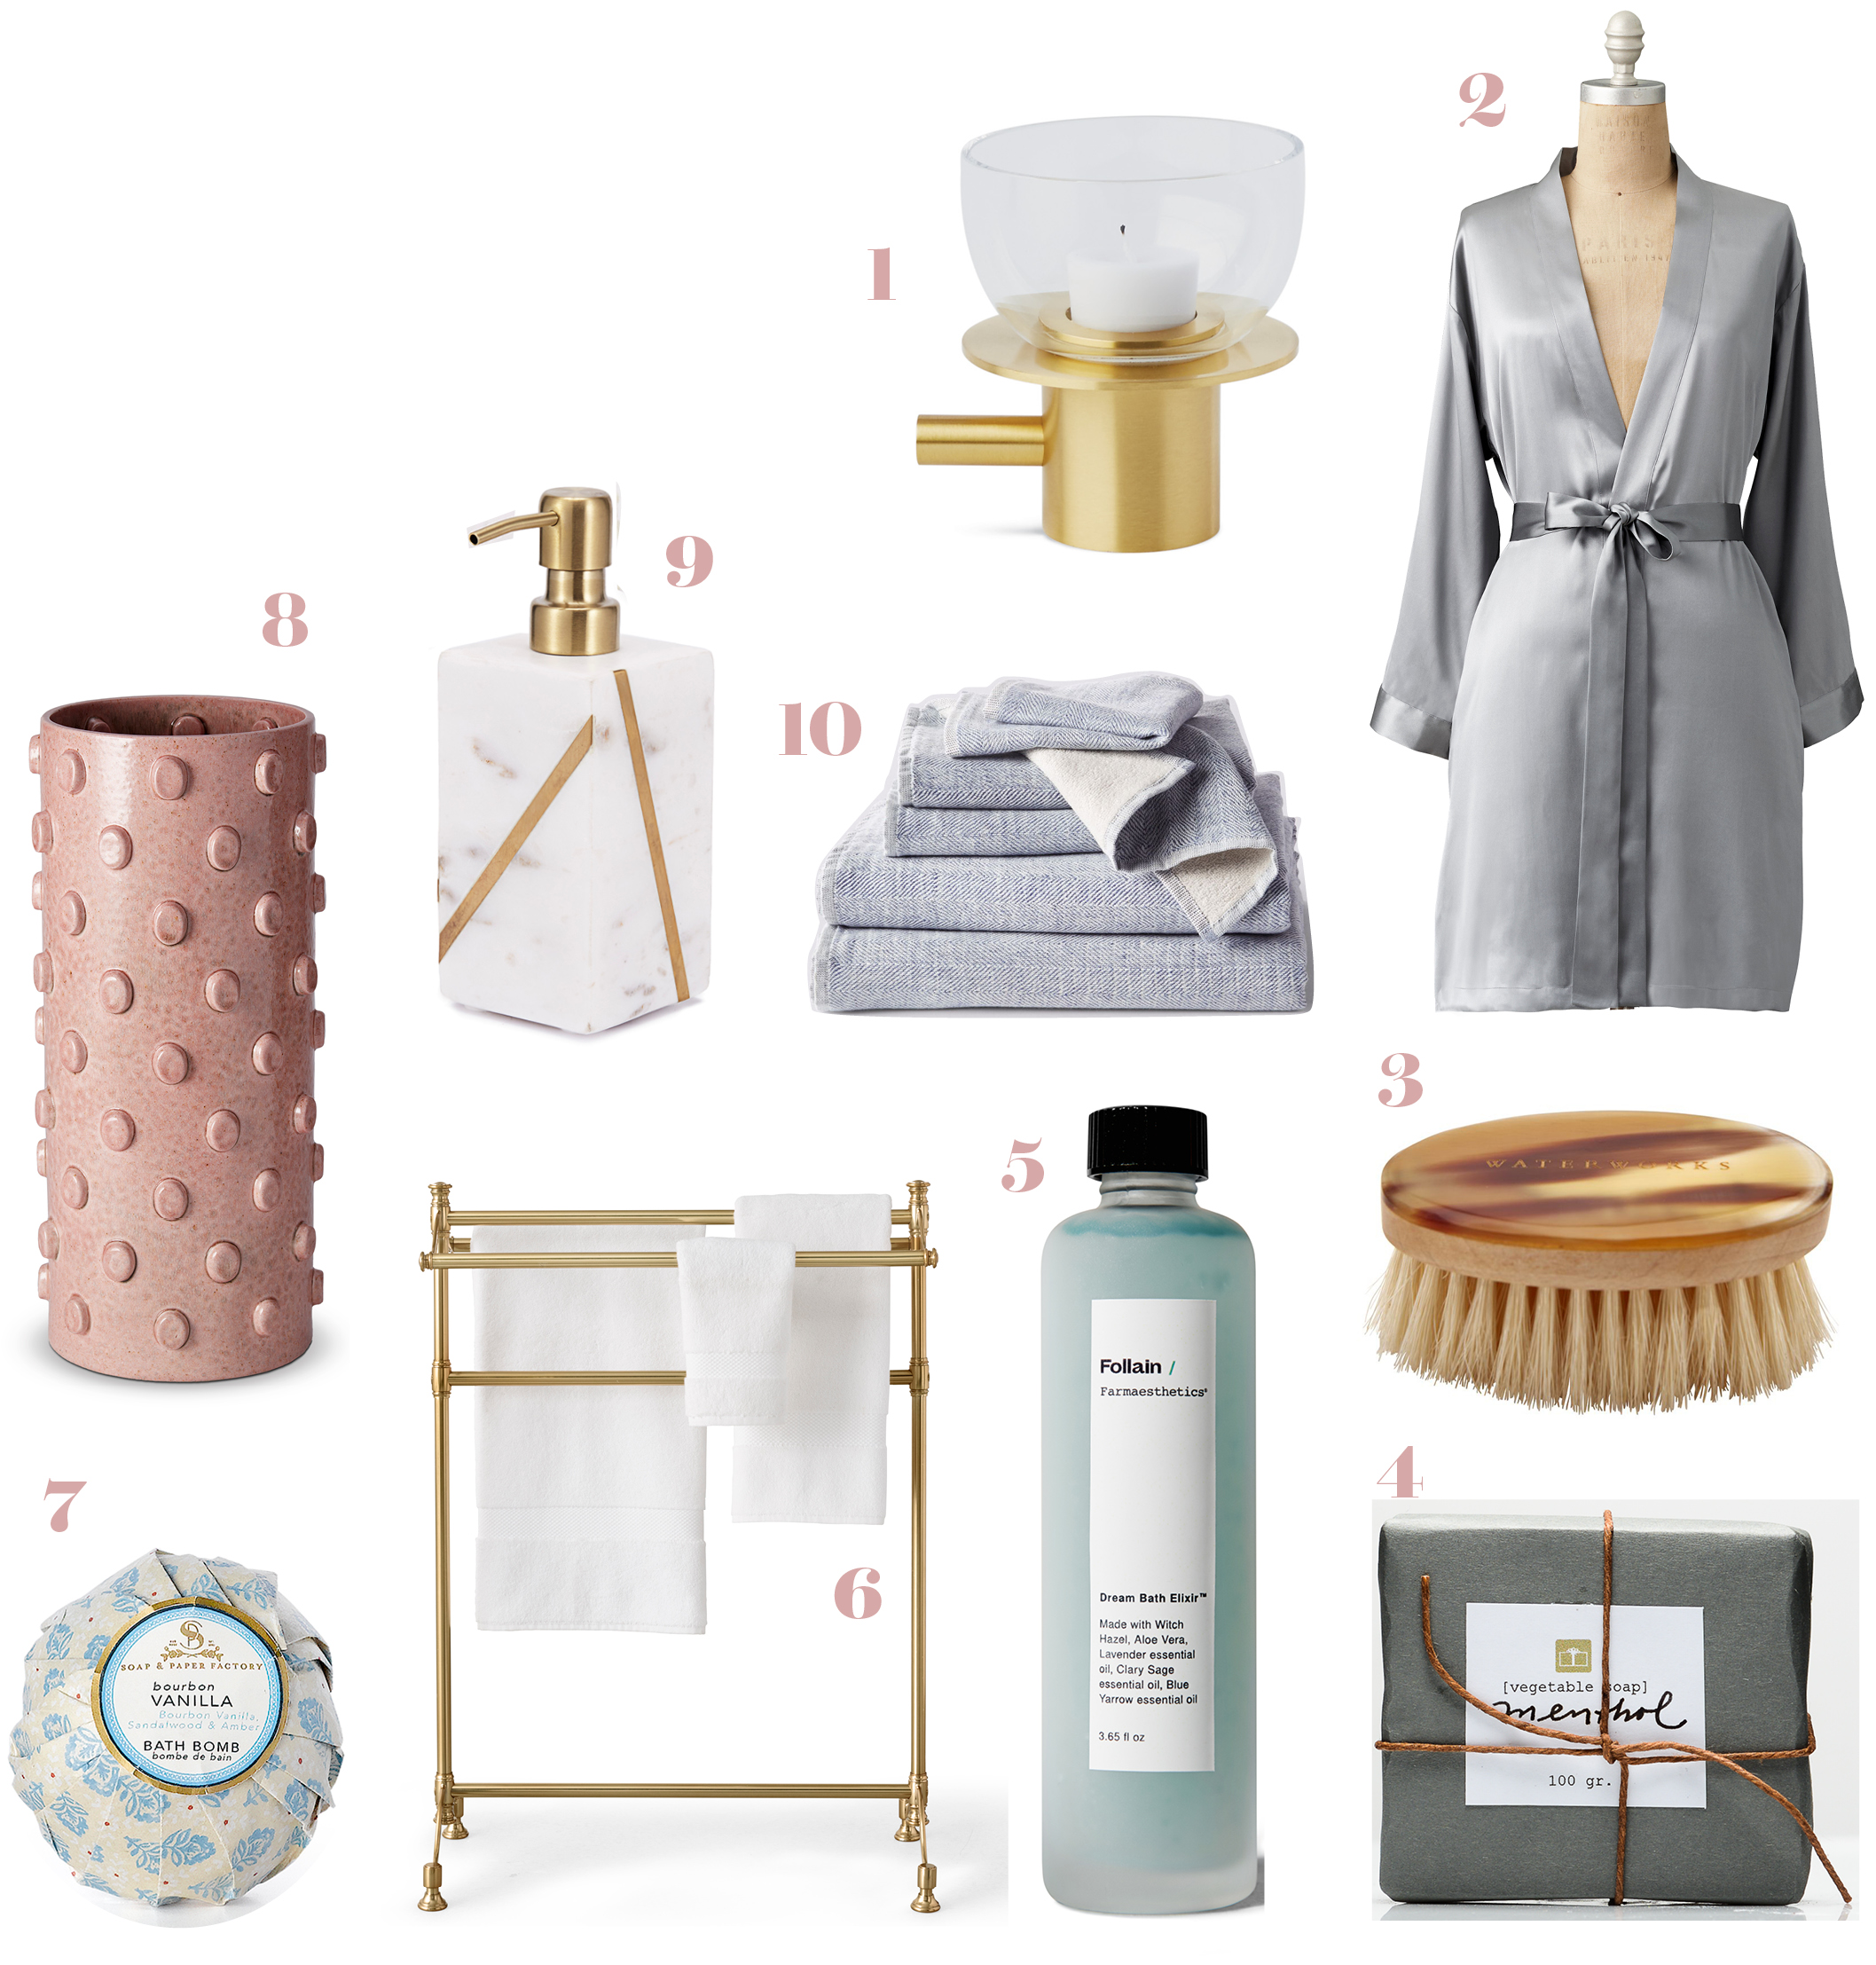 10 Luxe Bath Accessories to Make Every Day a Spa Day - Boston Magazine